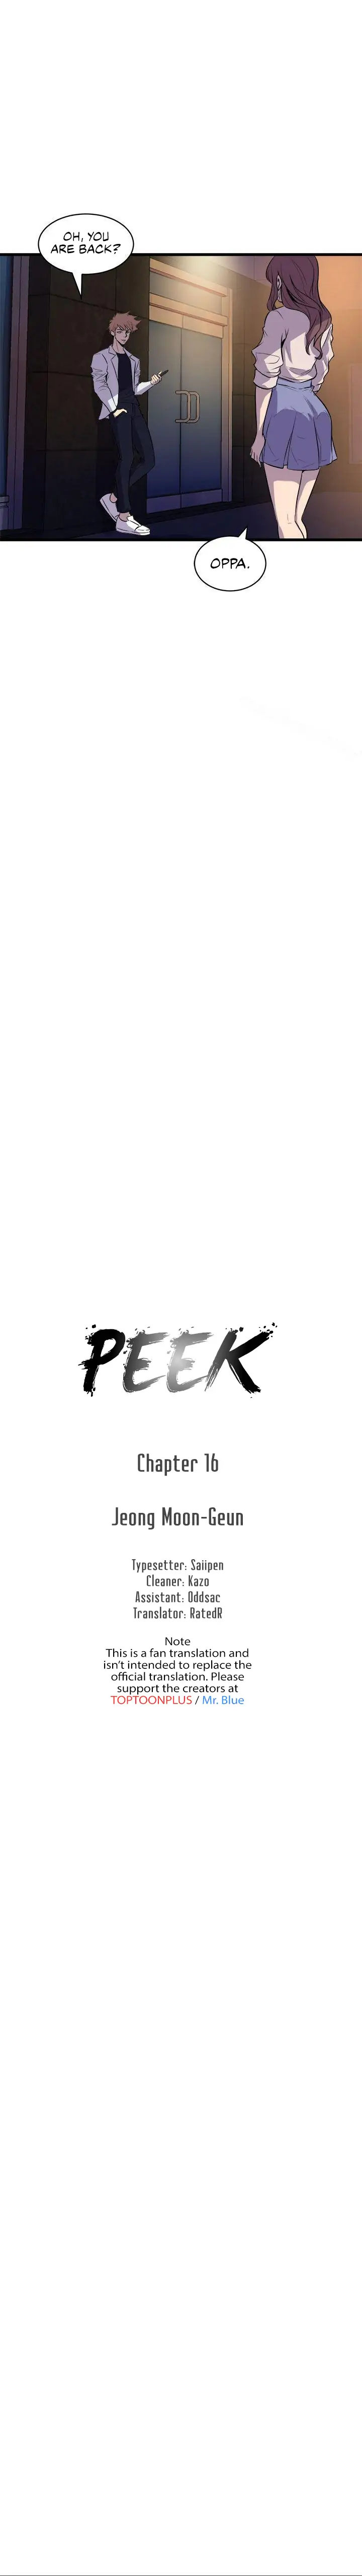 Peek - Chapter 16 Page 2